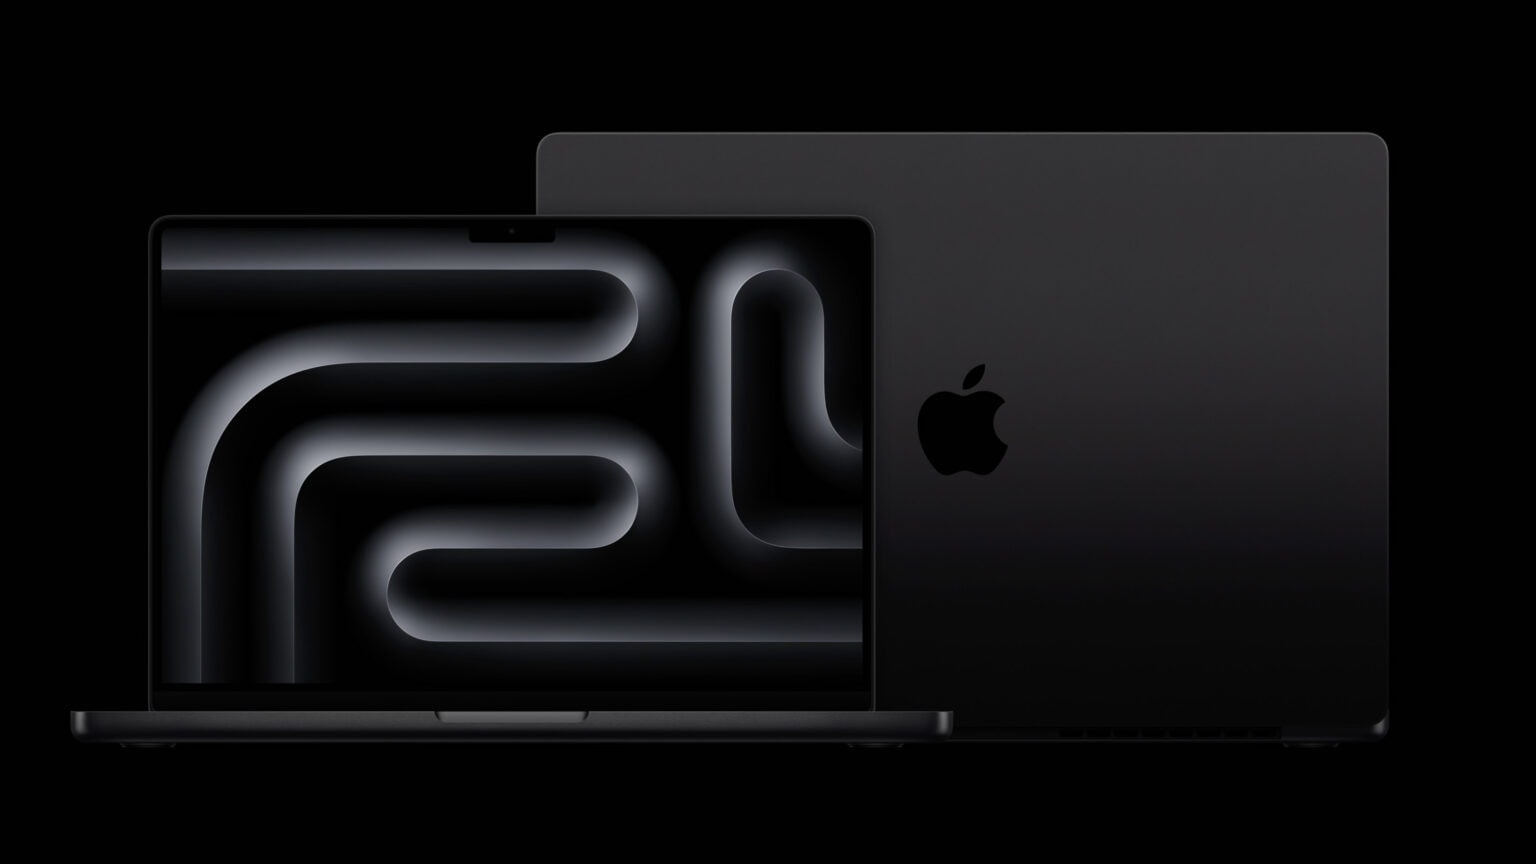 M3 MacBook Pro in space black